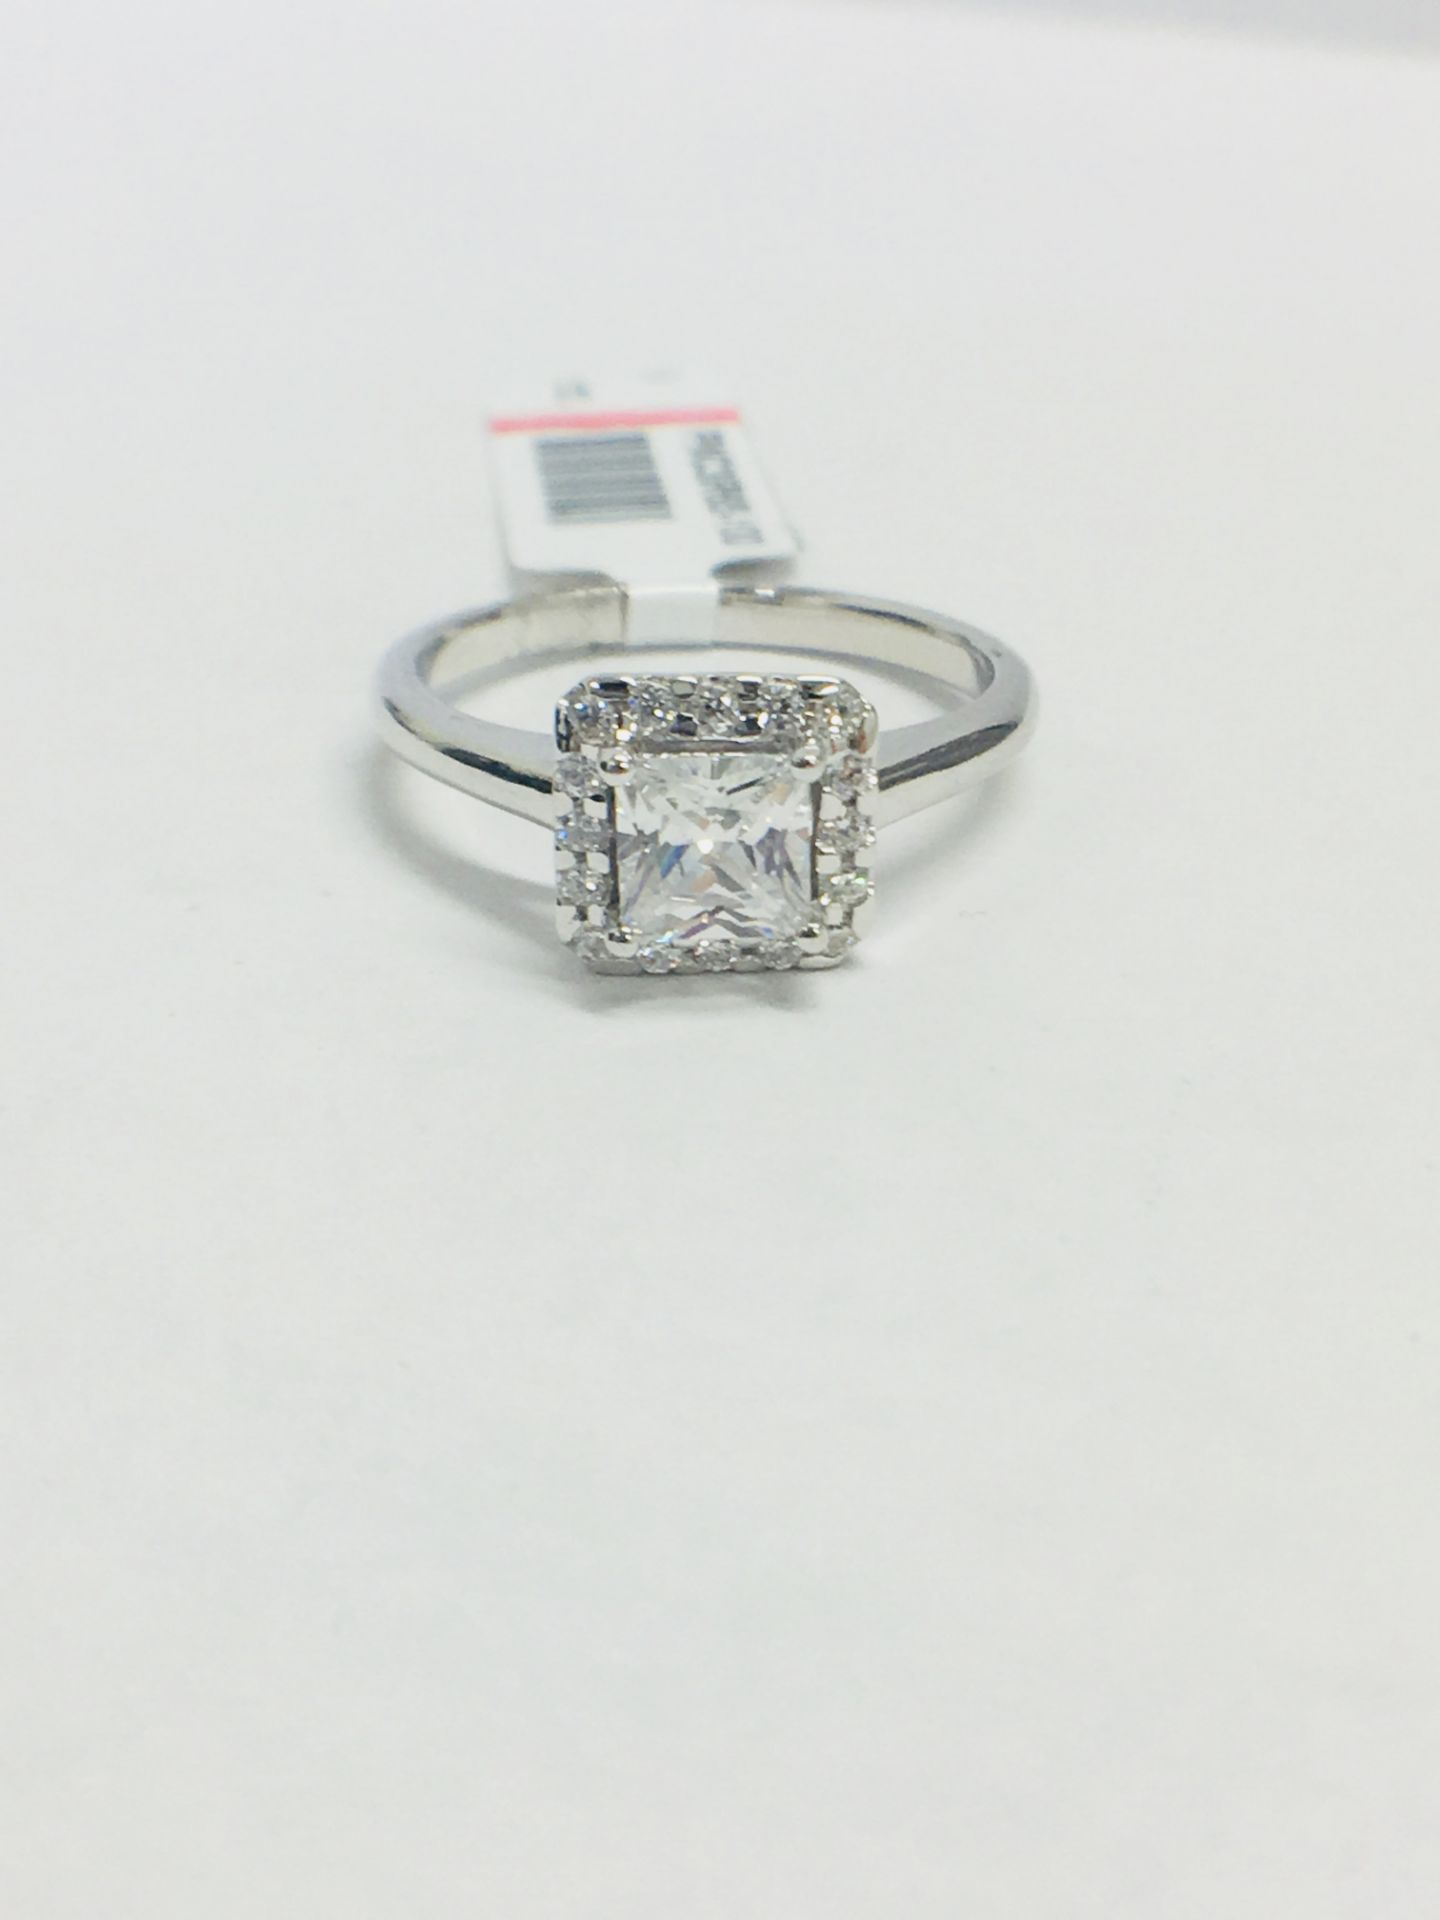 Platinum Princess cut Diamond Ring,1ct Princess cut natural diamond,h colour,si1 clarity,16 round - Image 2 of 8